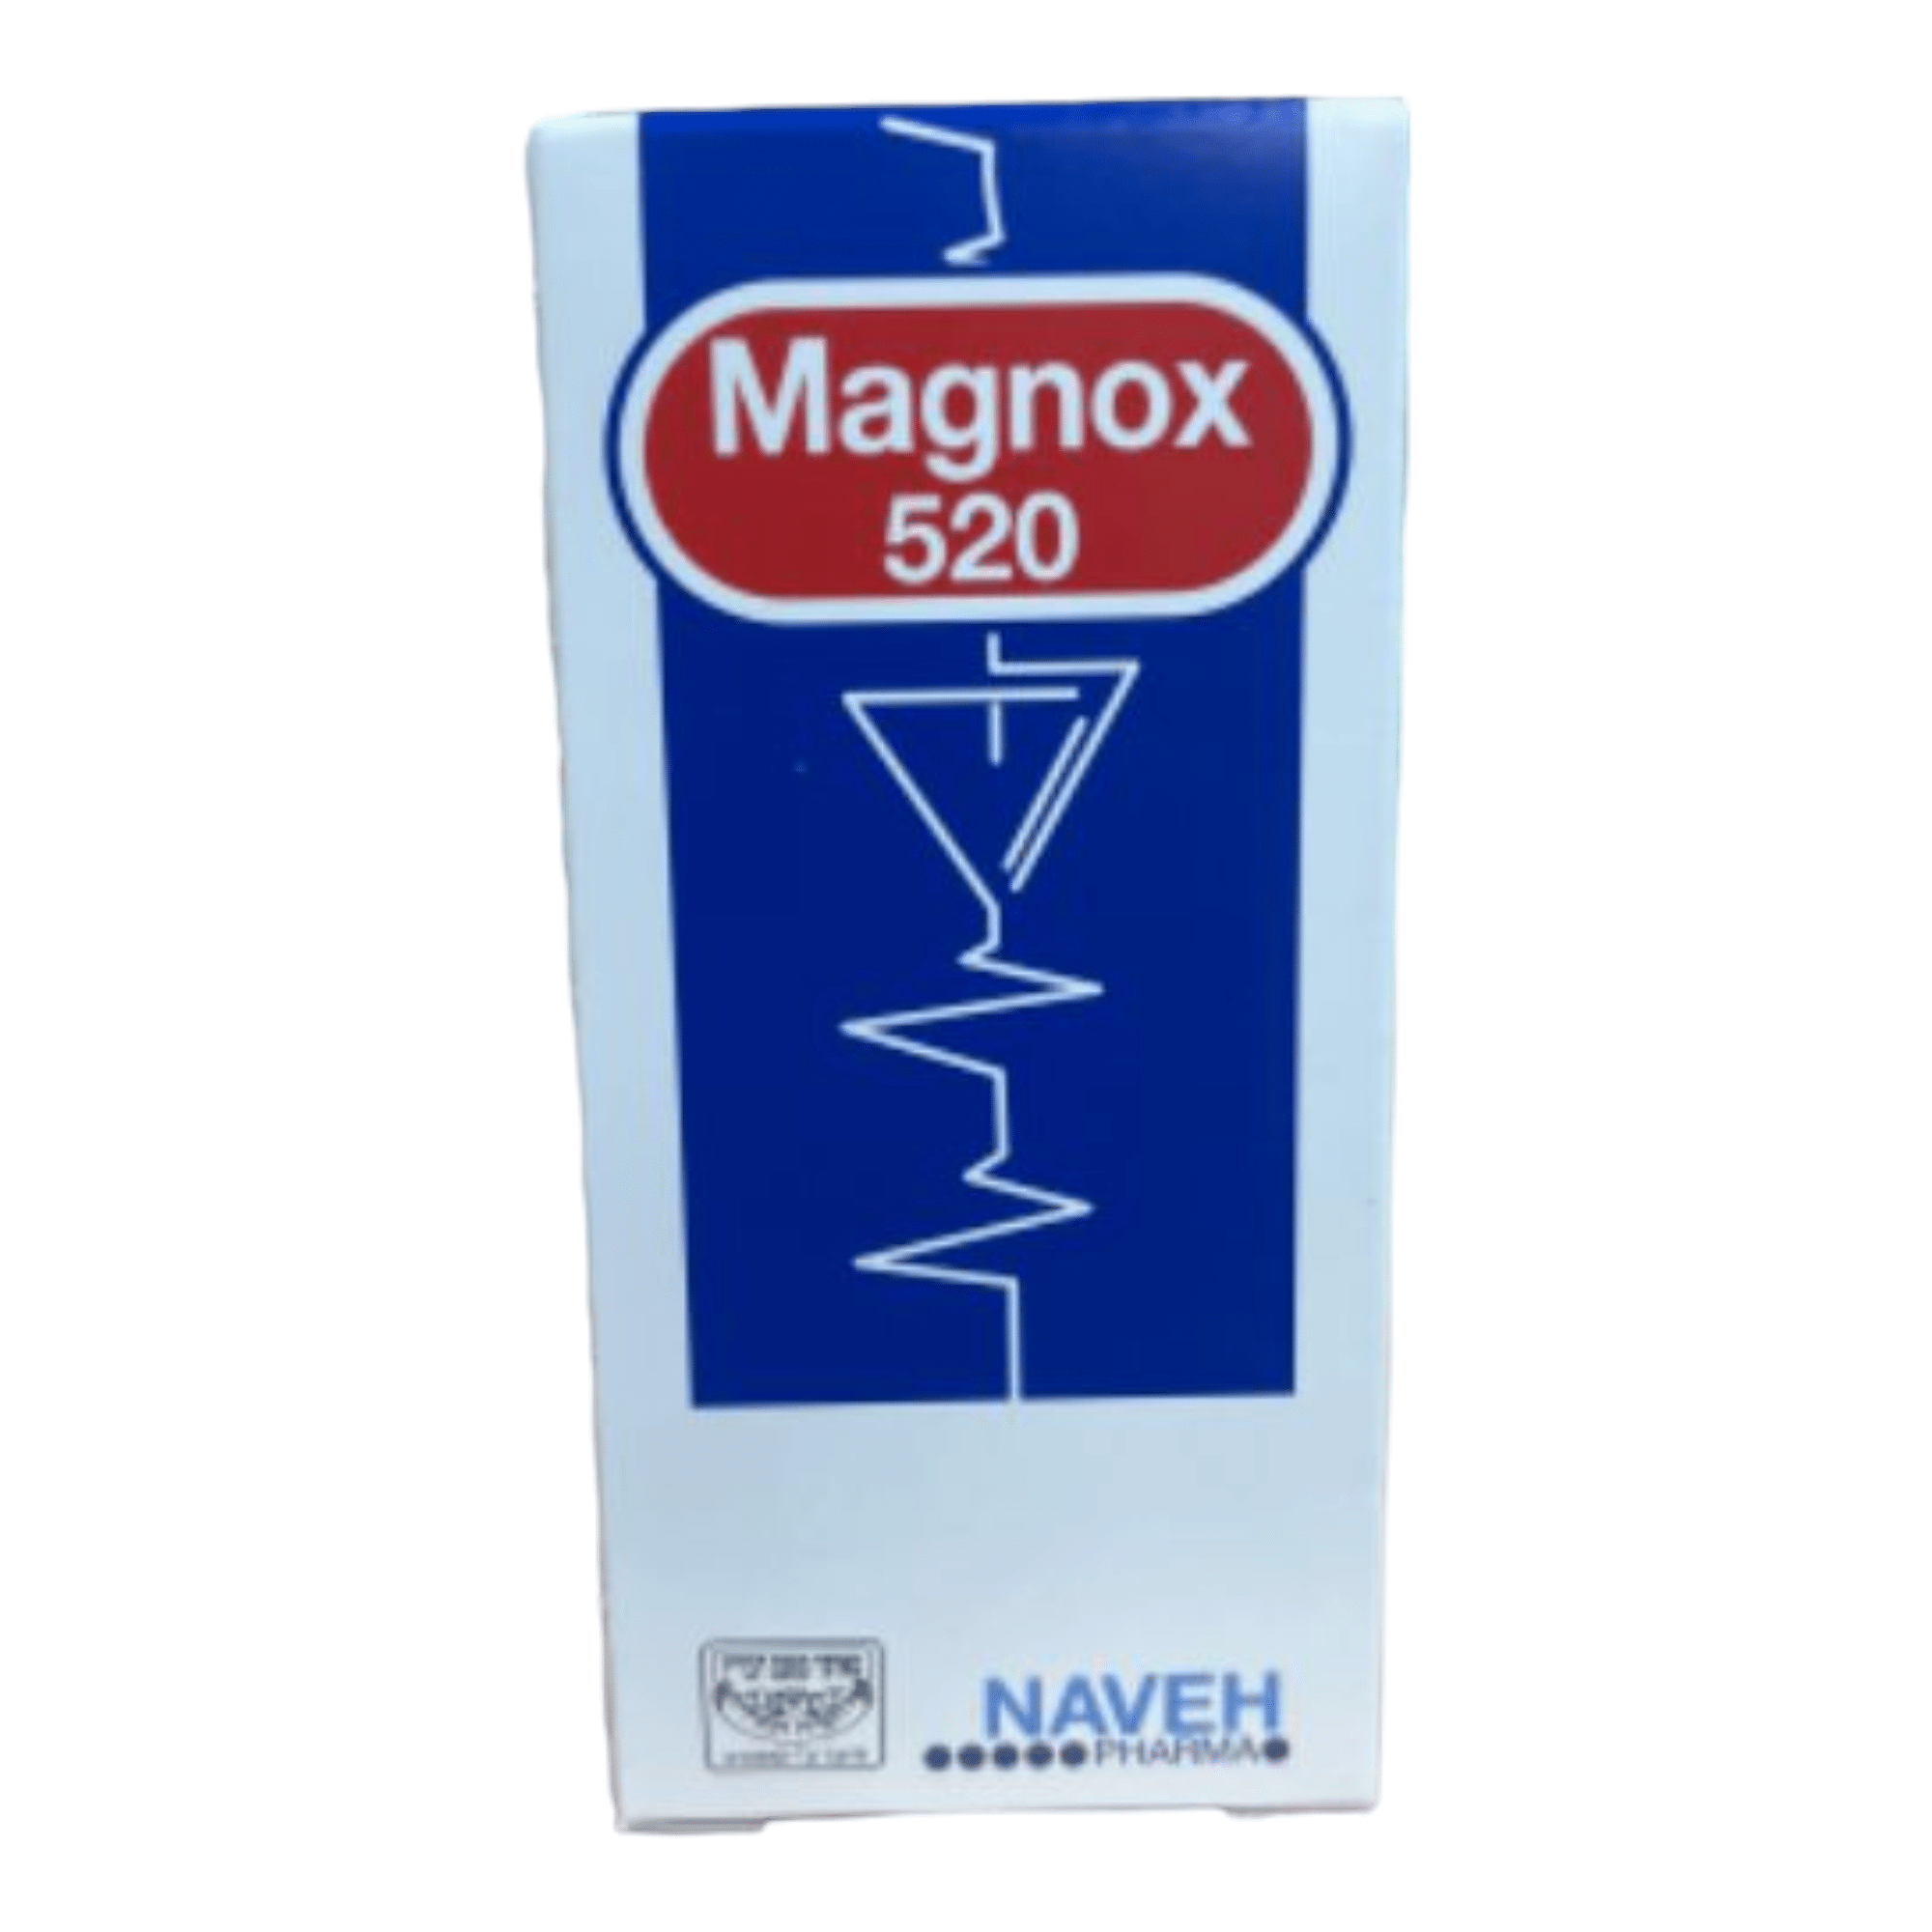 MAGNOX 520 תוסף מגנזיום לספיגה תוך תאית יעילה יותר – מגנוקס